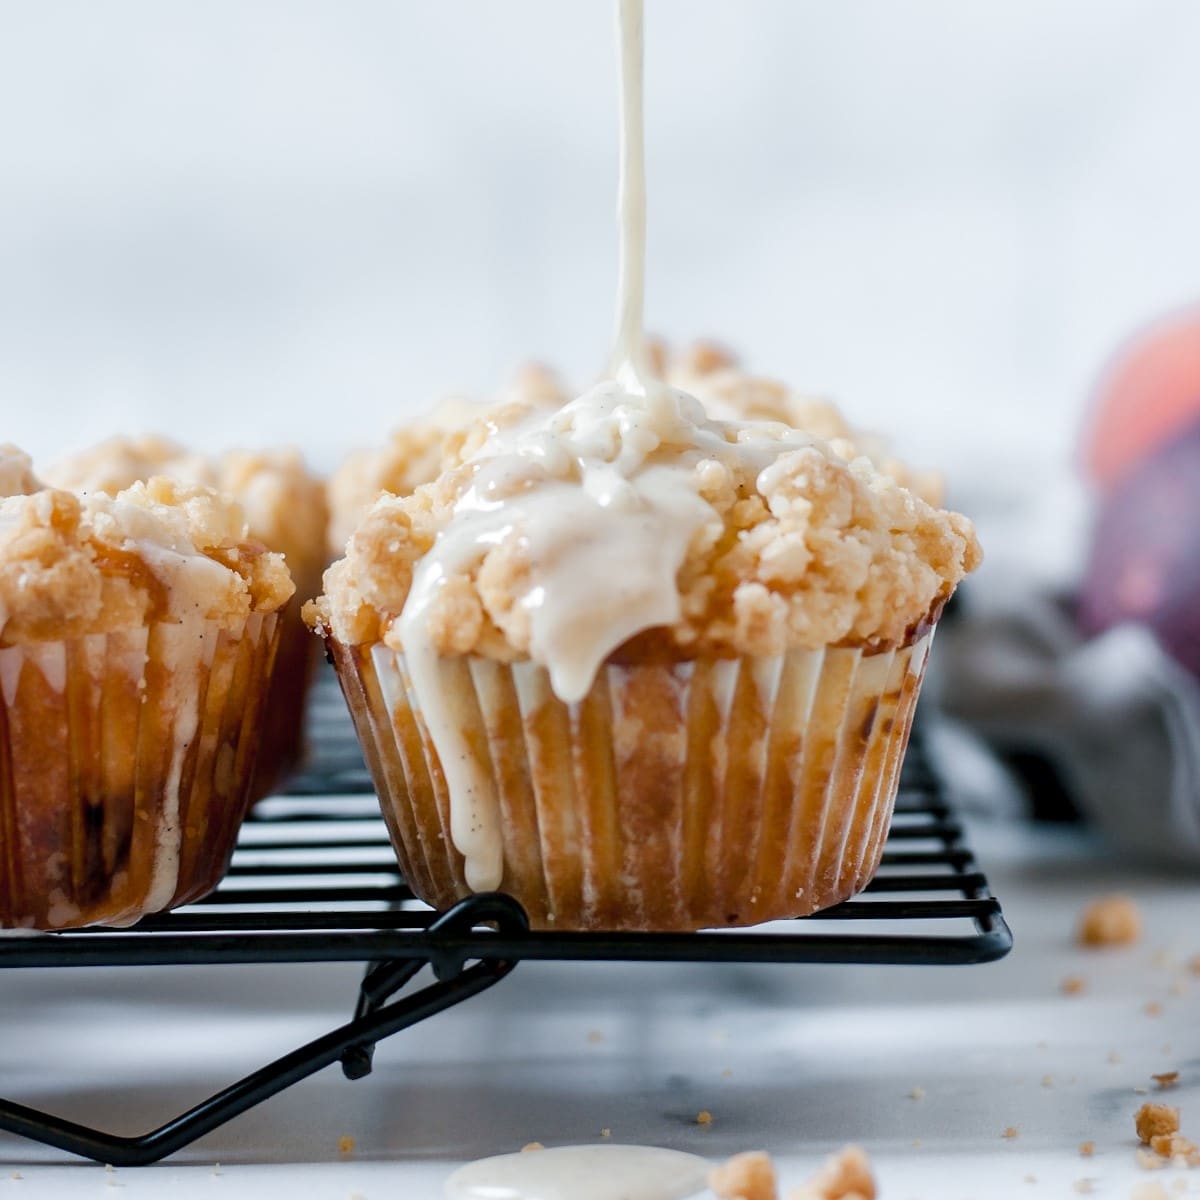 Peach muffins being drizzled with vanilla bean glaze.